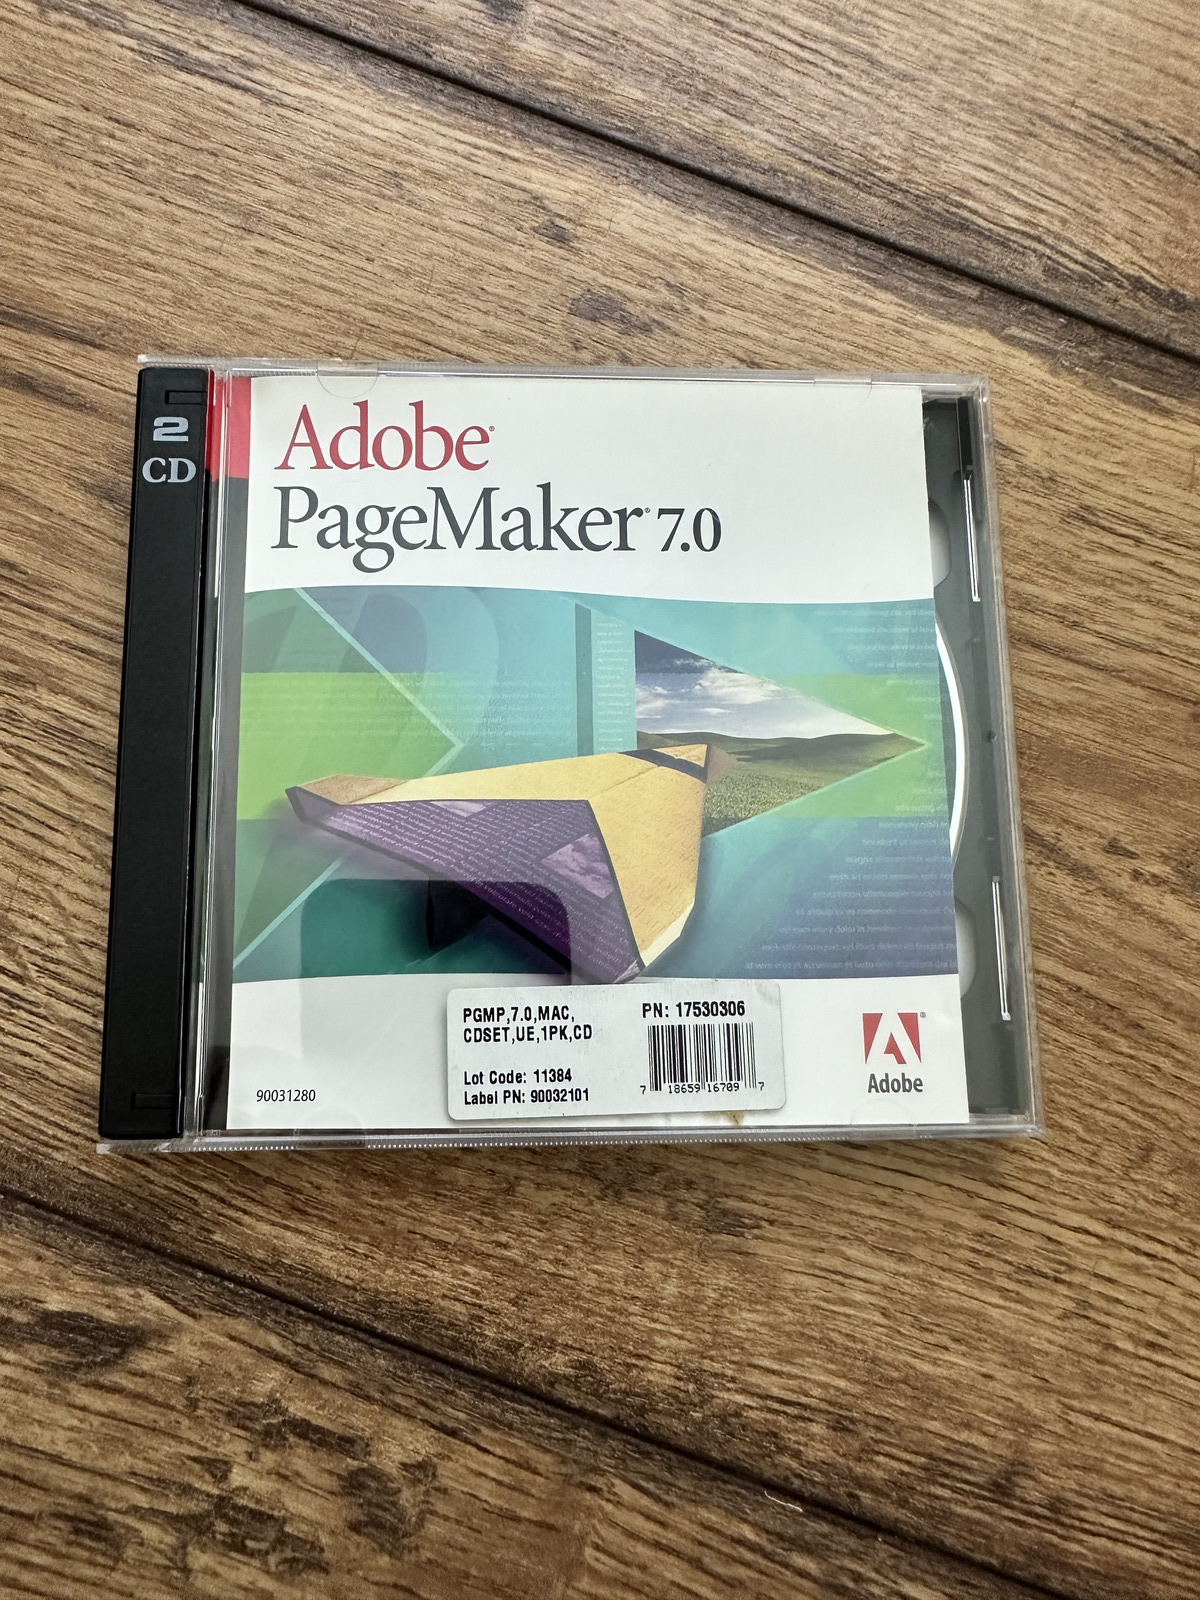 Adobe PageMaker 7.0 CD2? for Macintosh W/Serial Number handwritten